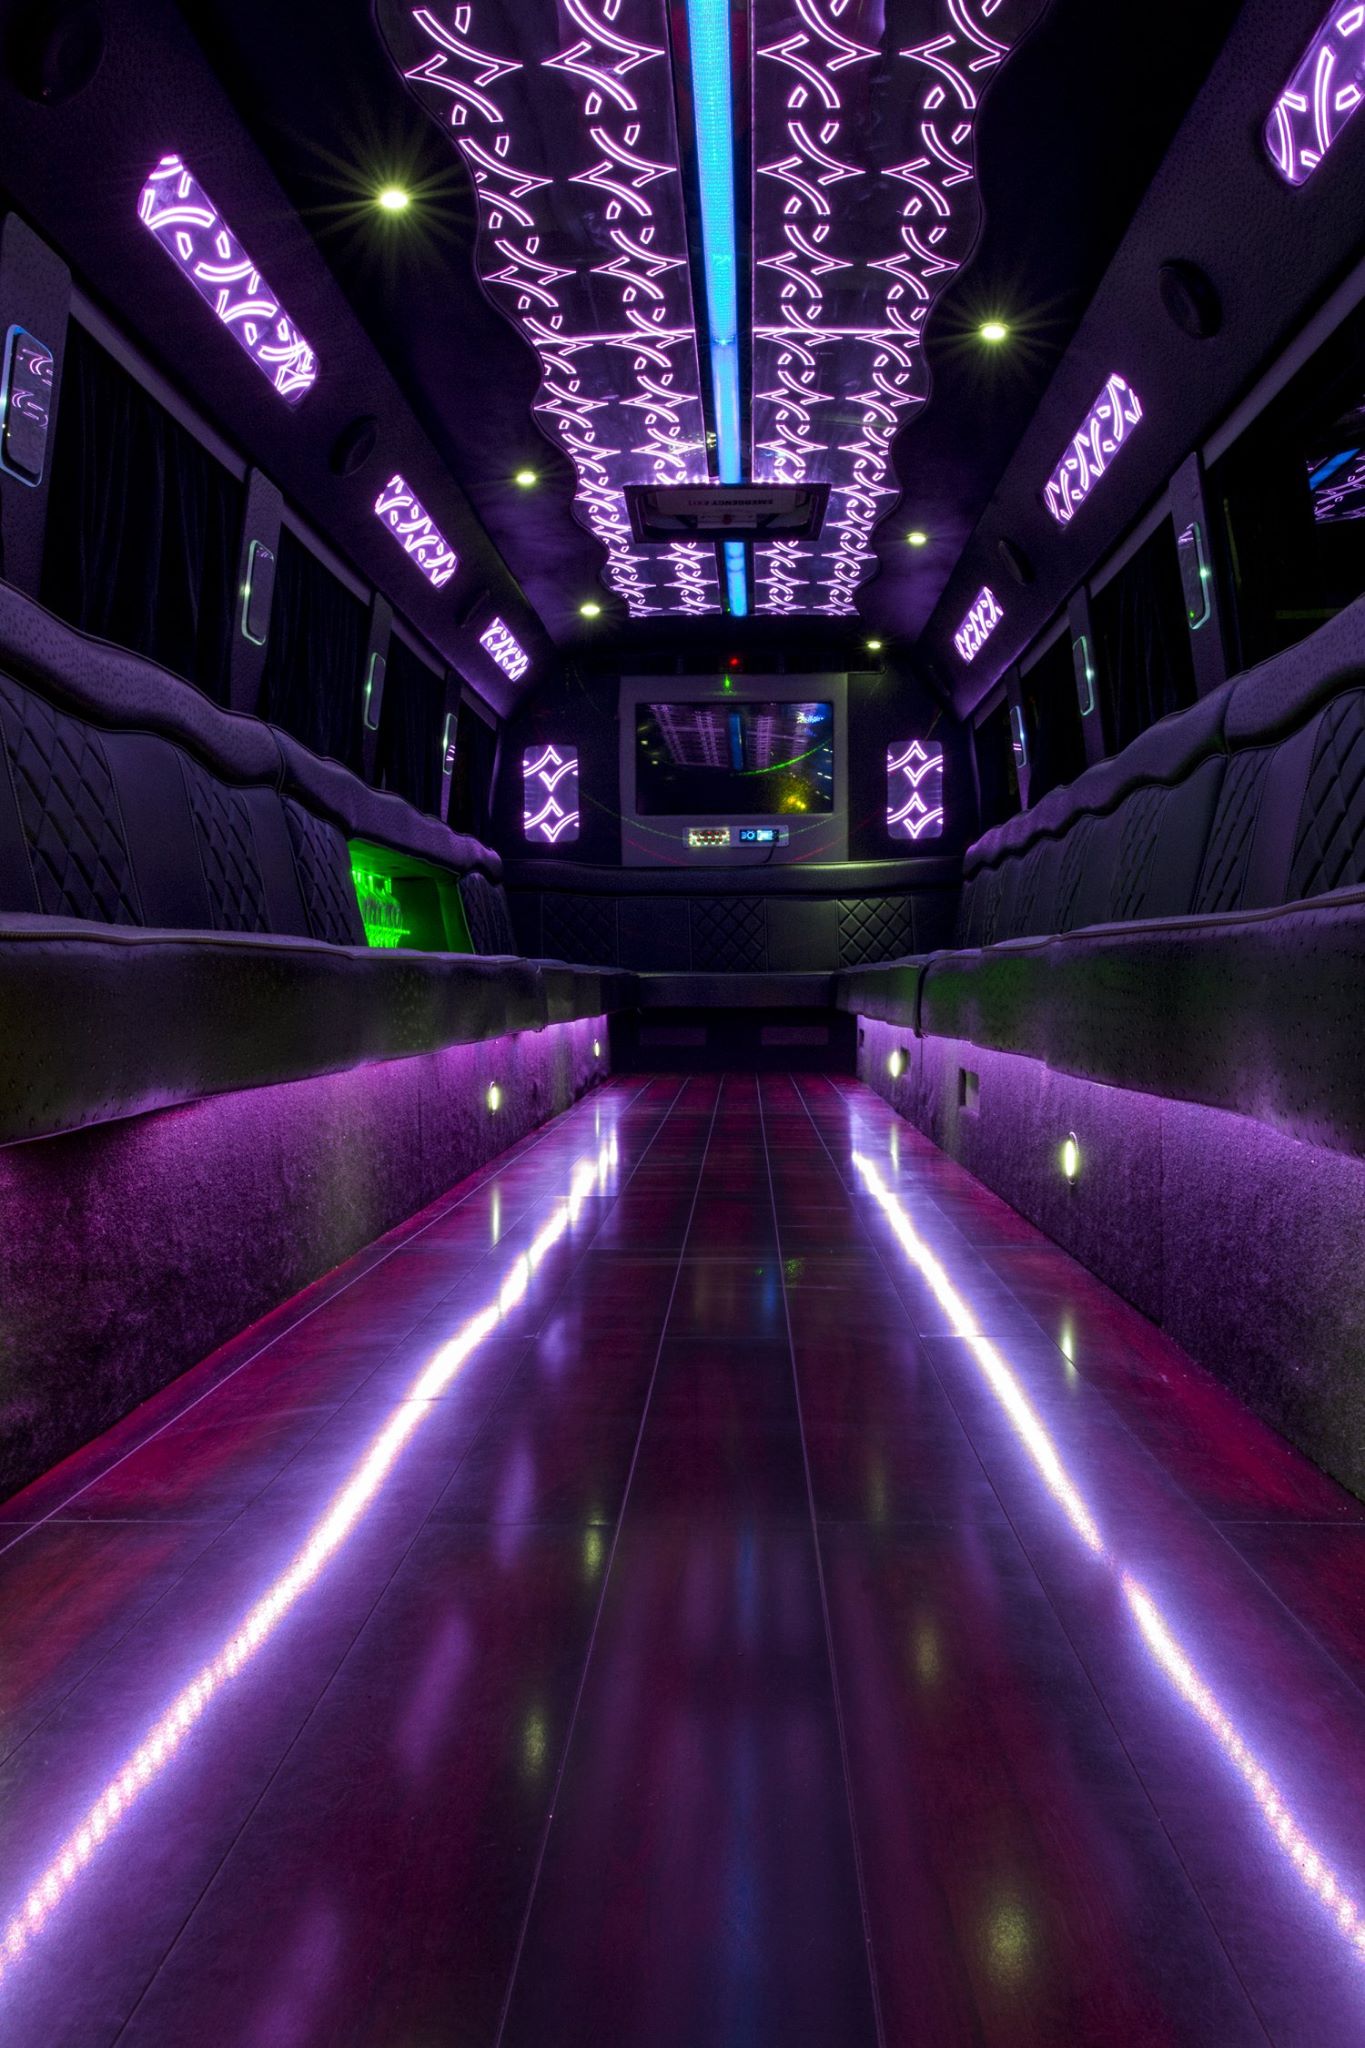 40 Passenger Luxury Limo Bus Interior 4